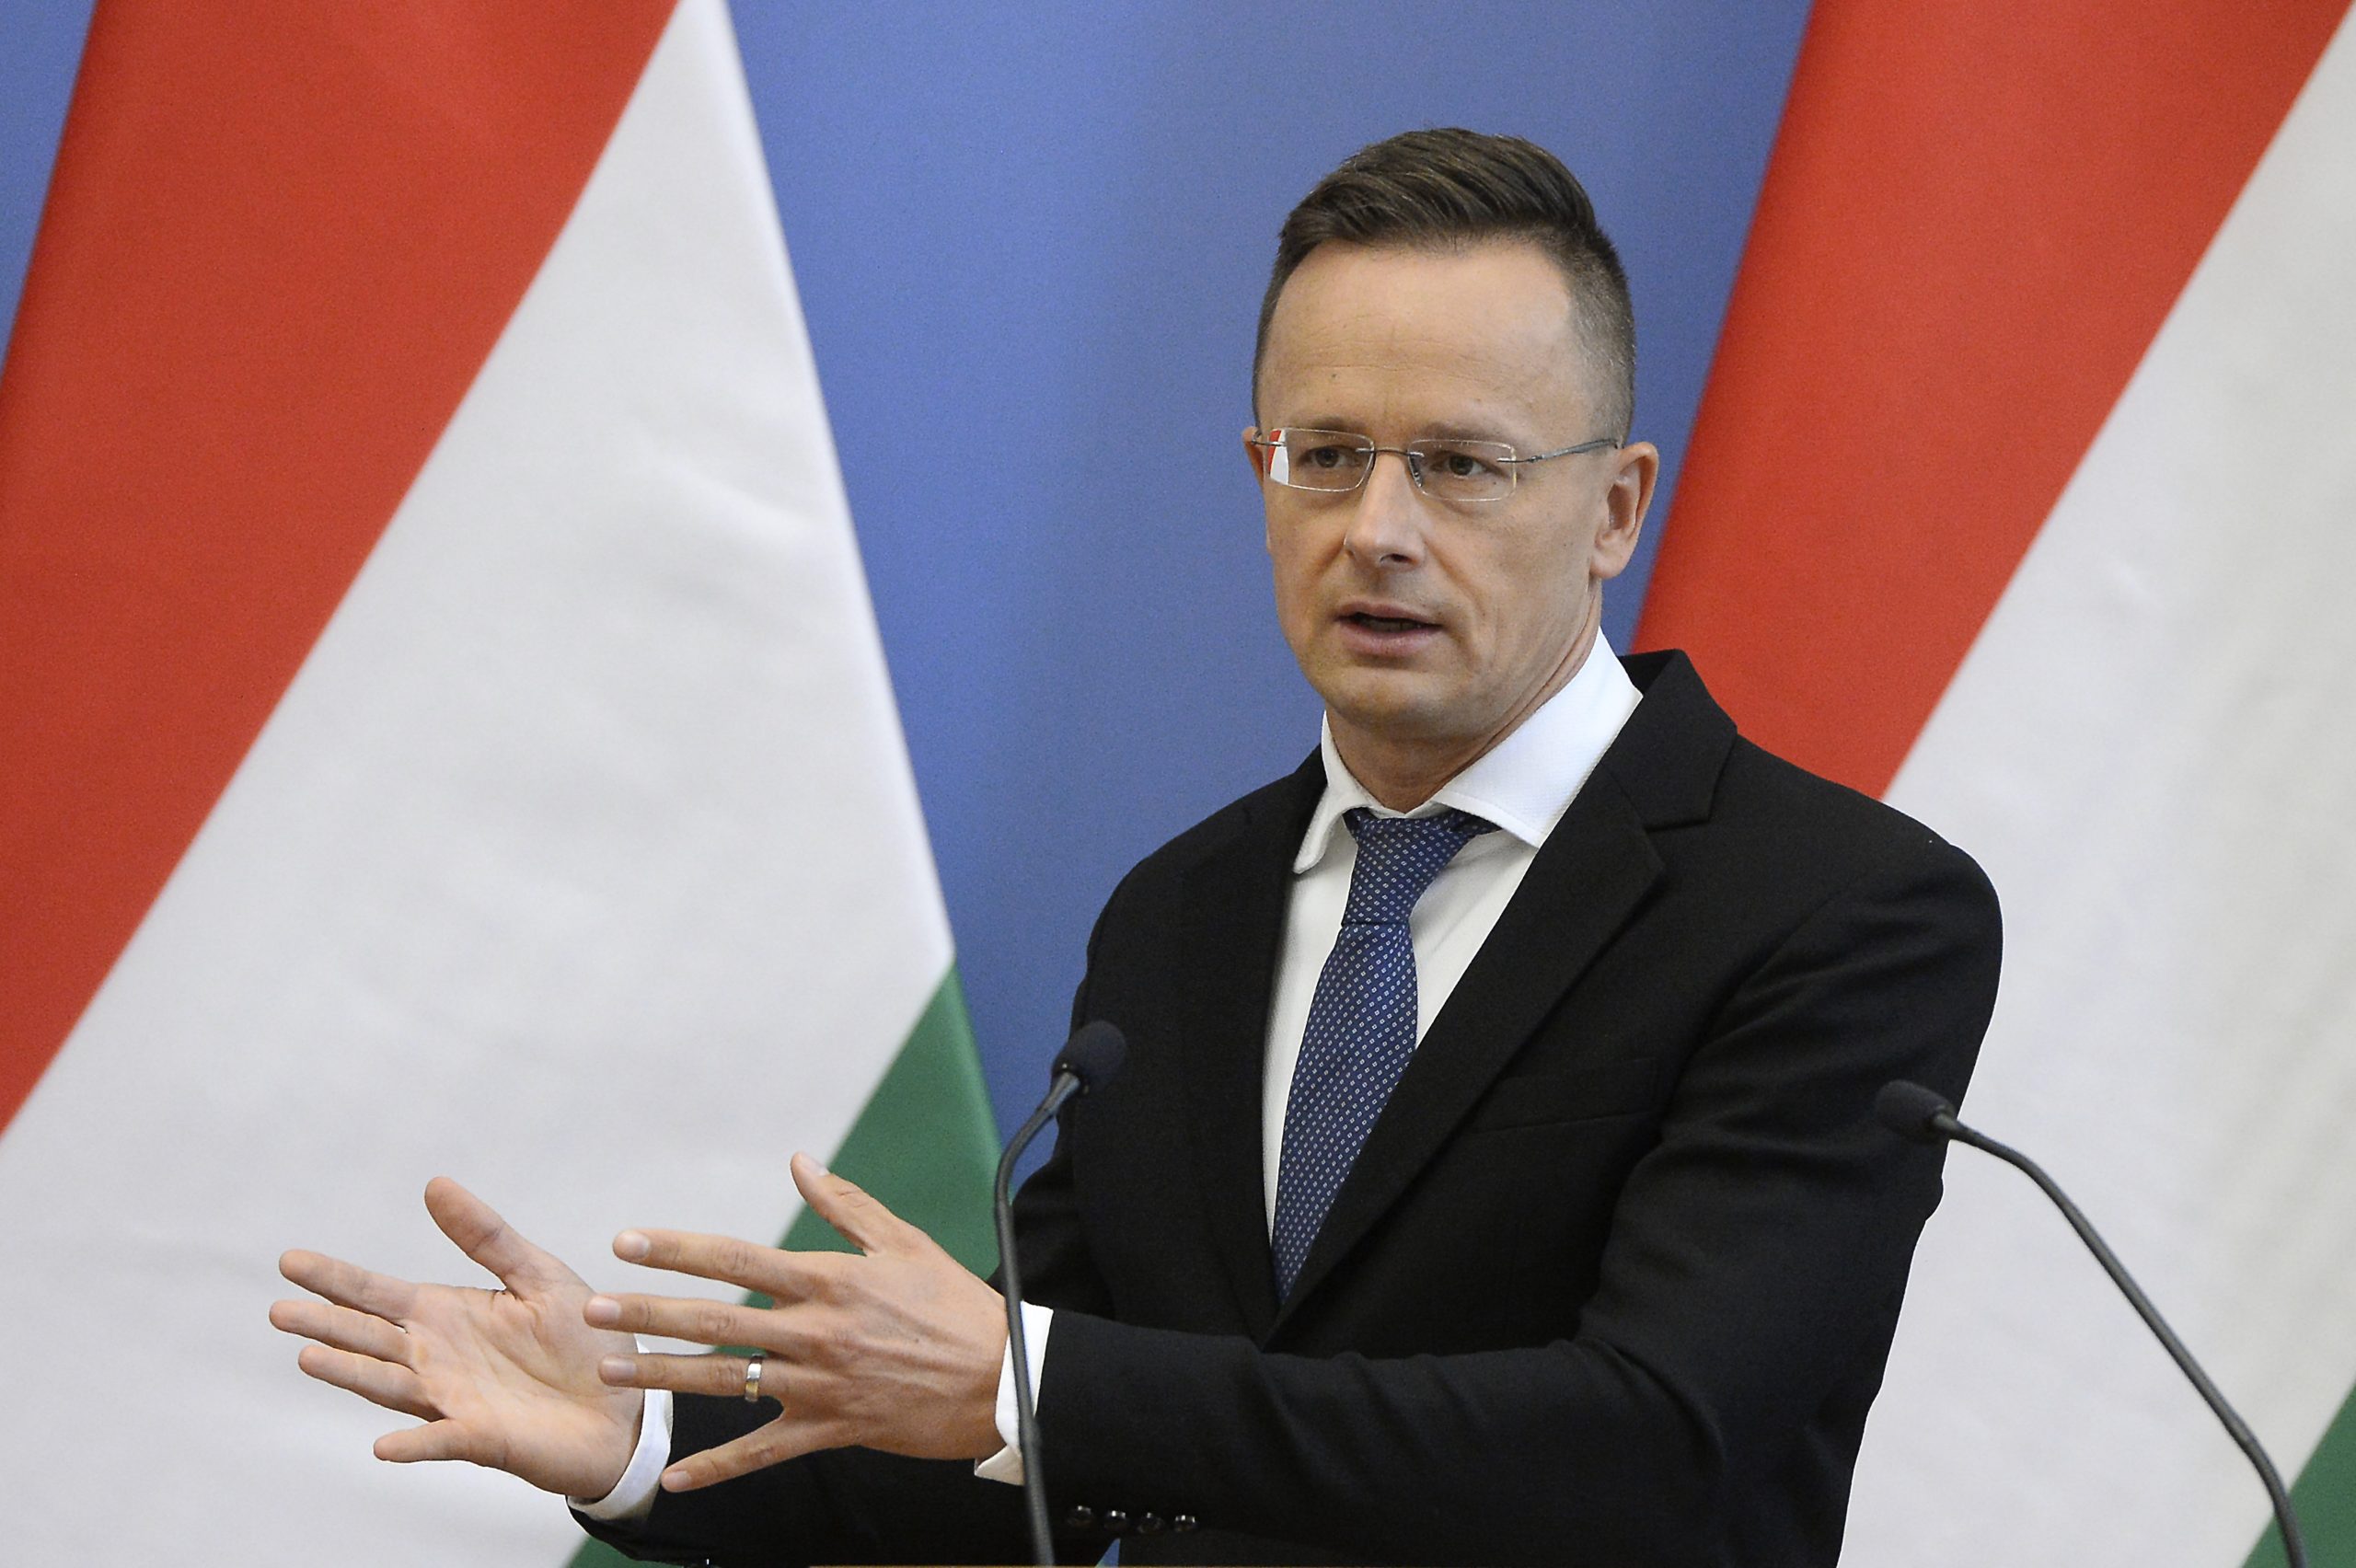 FM Szijjártó: Hungary and Poland Not Moving Away from EU